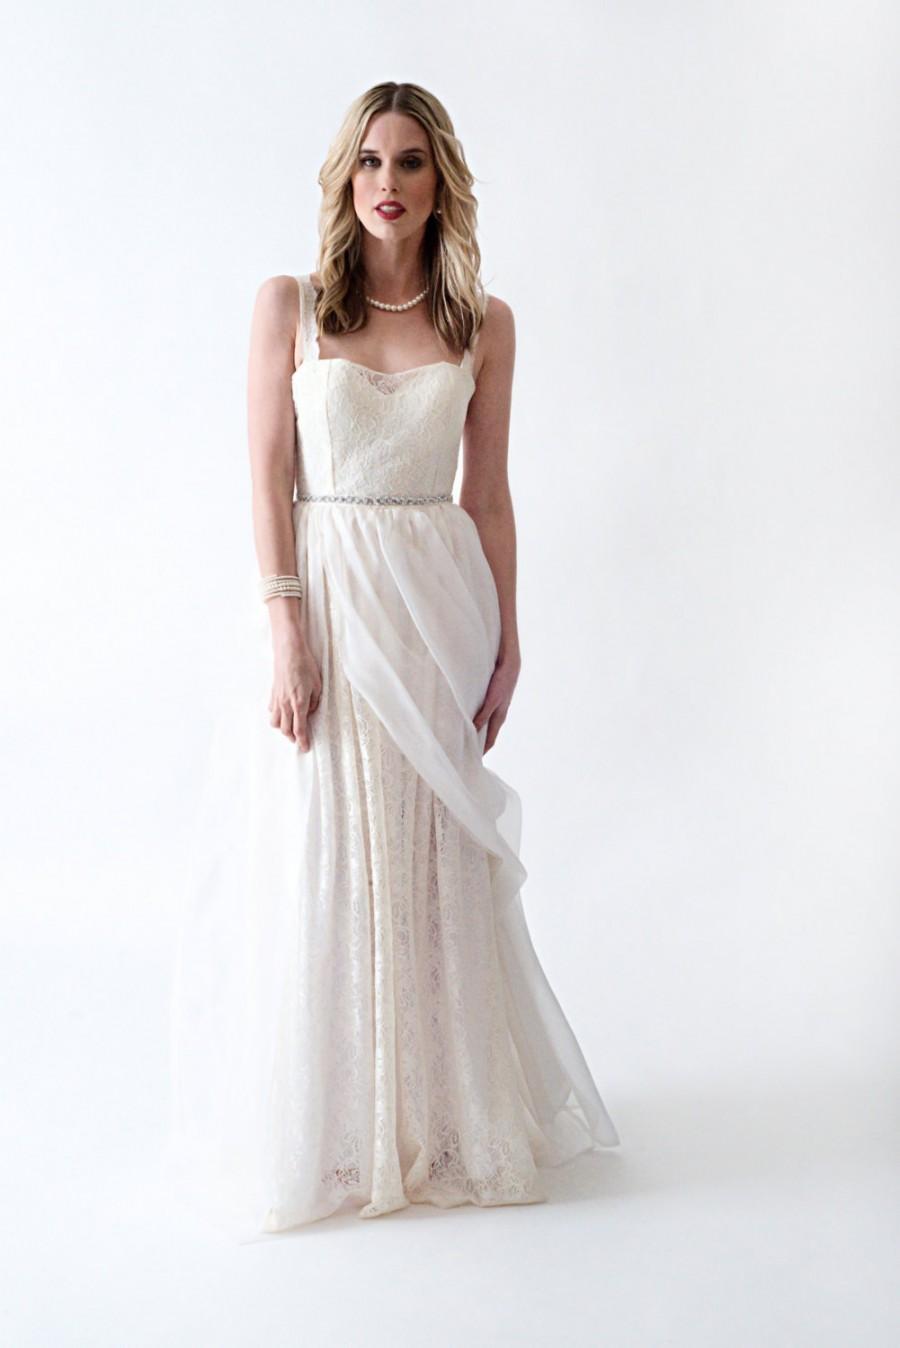 Mariage - Fall Sale Ends Nov 30th Princess Boho lace Wedding Dress with straps Organza skirt Gathered Waist